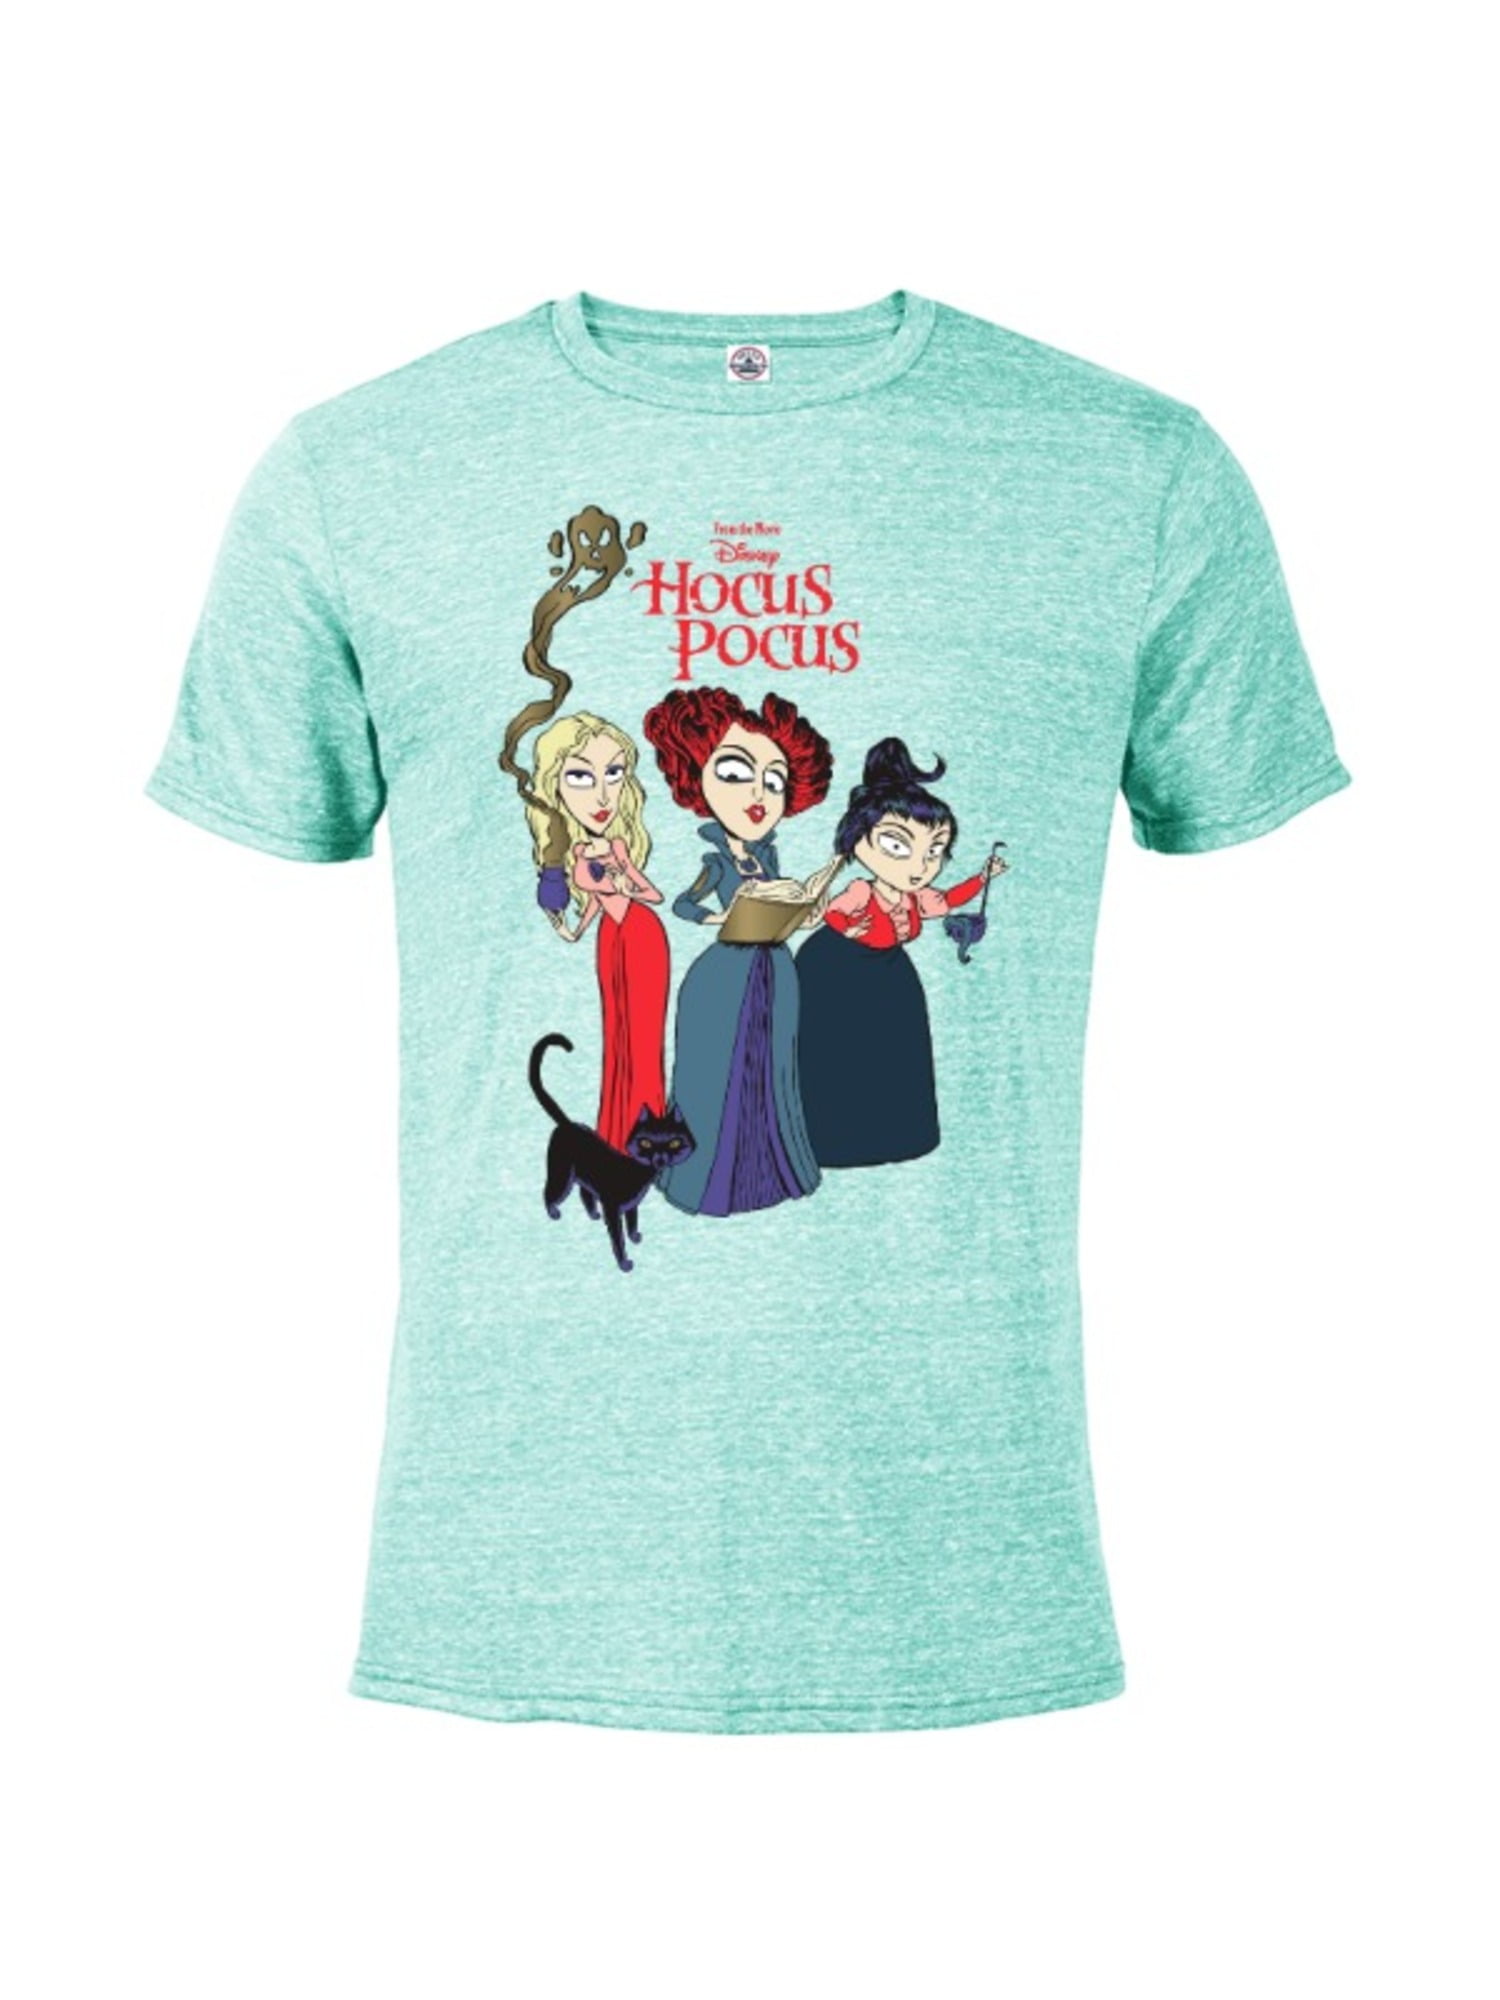 Disney Vacation Shirt Disneyland Shirt Hocus Pocus Shirt Hocus Pocus Tee